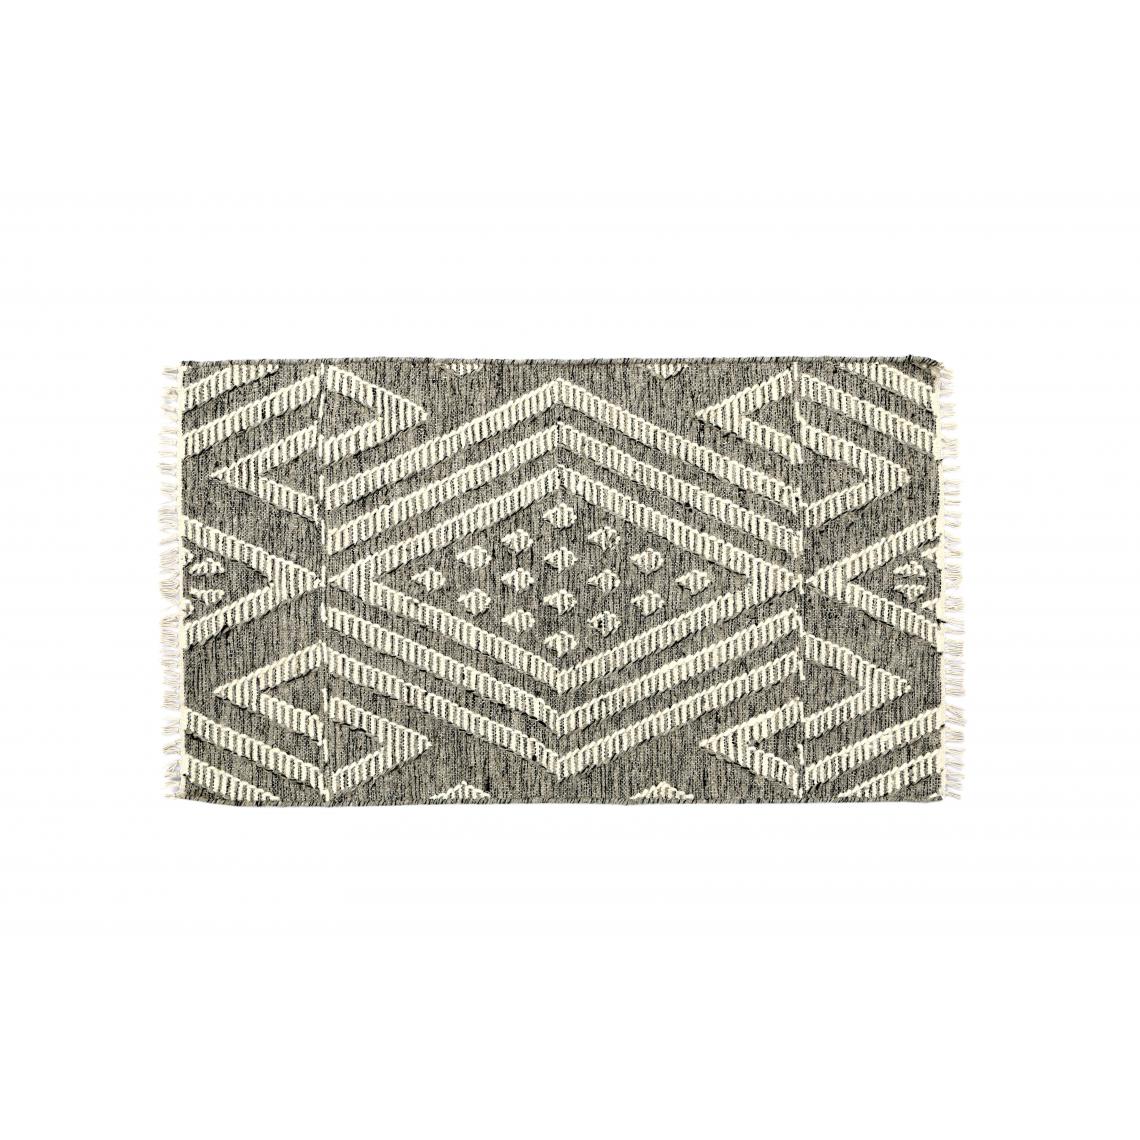 Alter - Tapis moderne Orlando, style kilim, 100% coton, multicolore, 110x60cm - Tapis